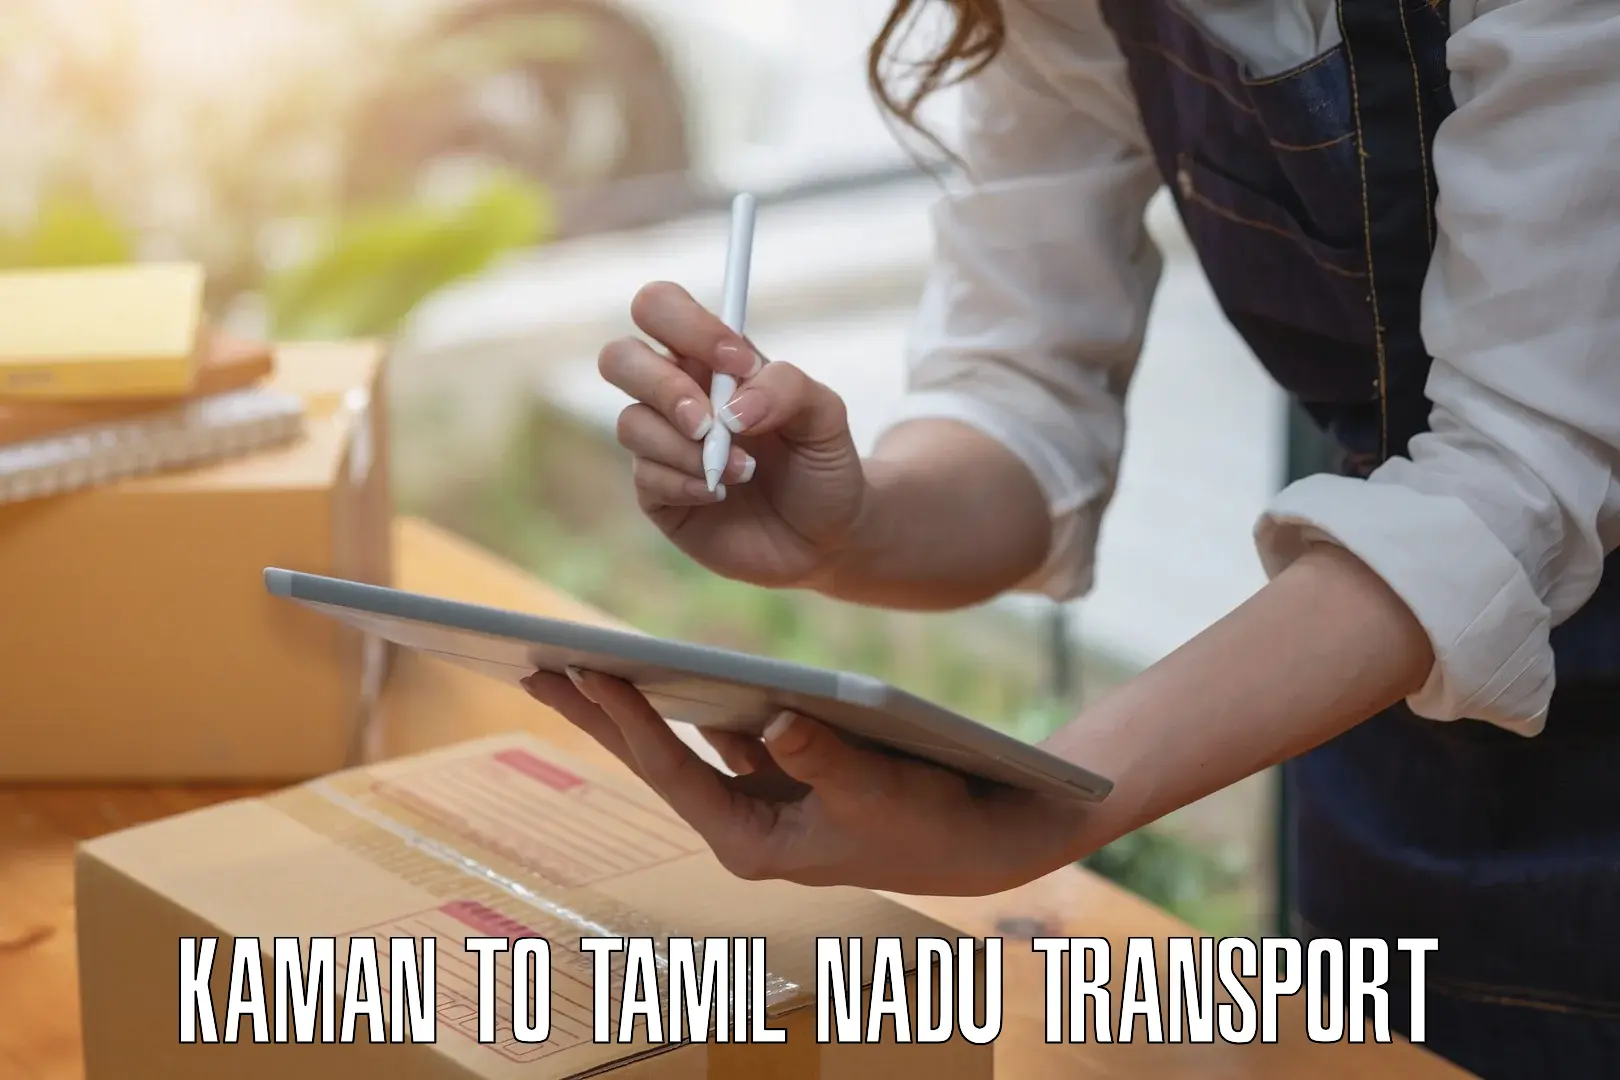 Vehicle transport services Kaman to Tamil Nadu